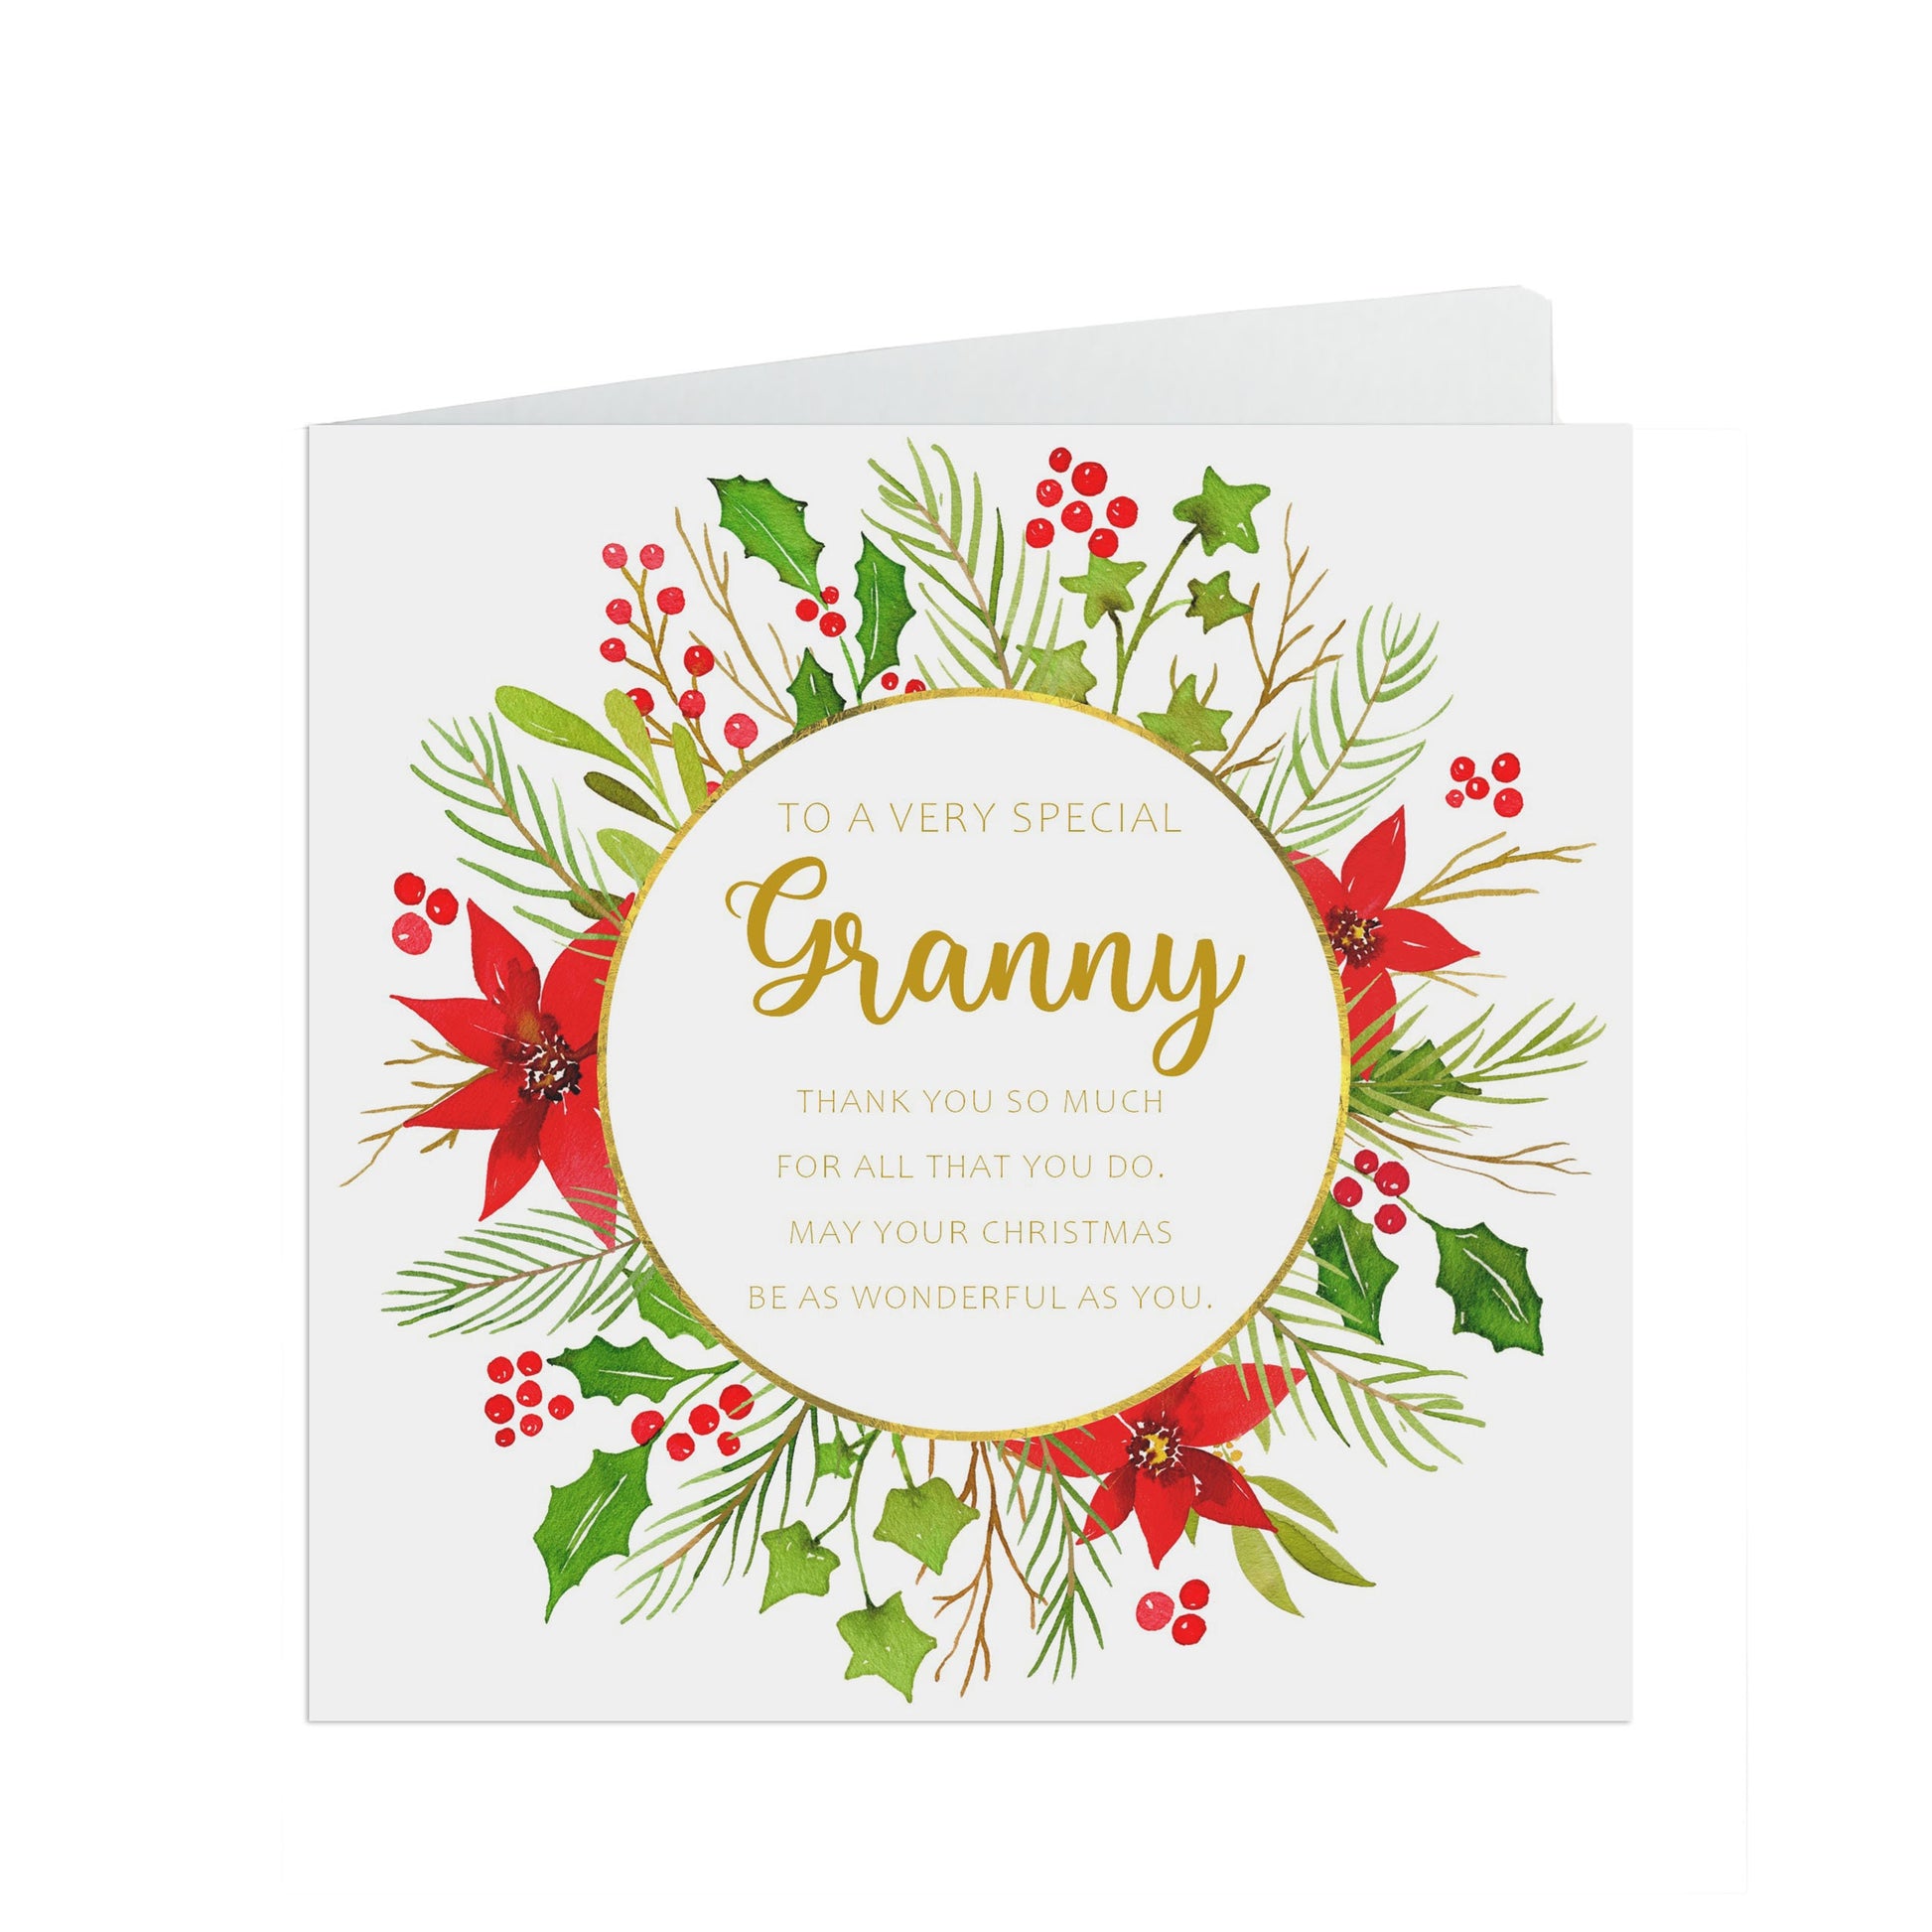 Granny Christmas Card, Traditional Poinsettia Design